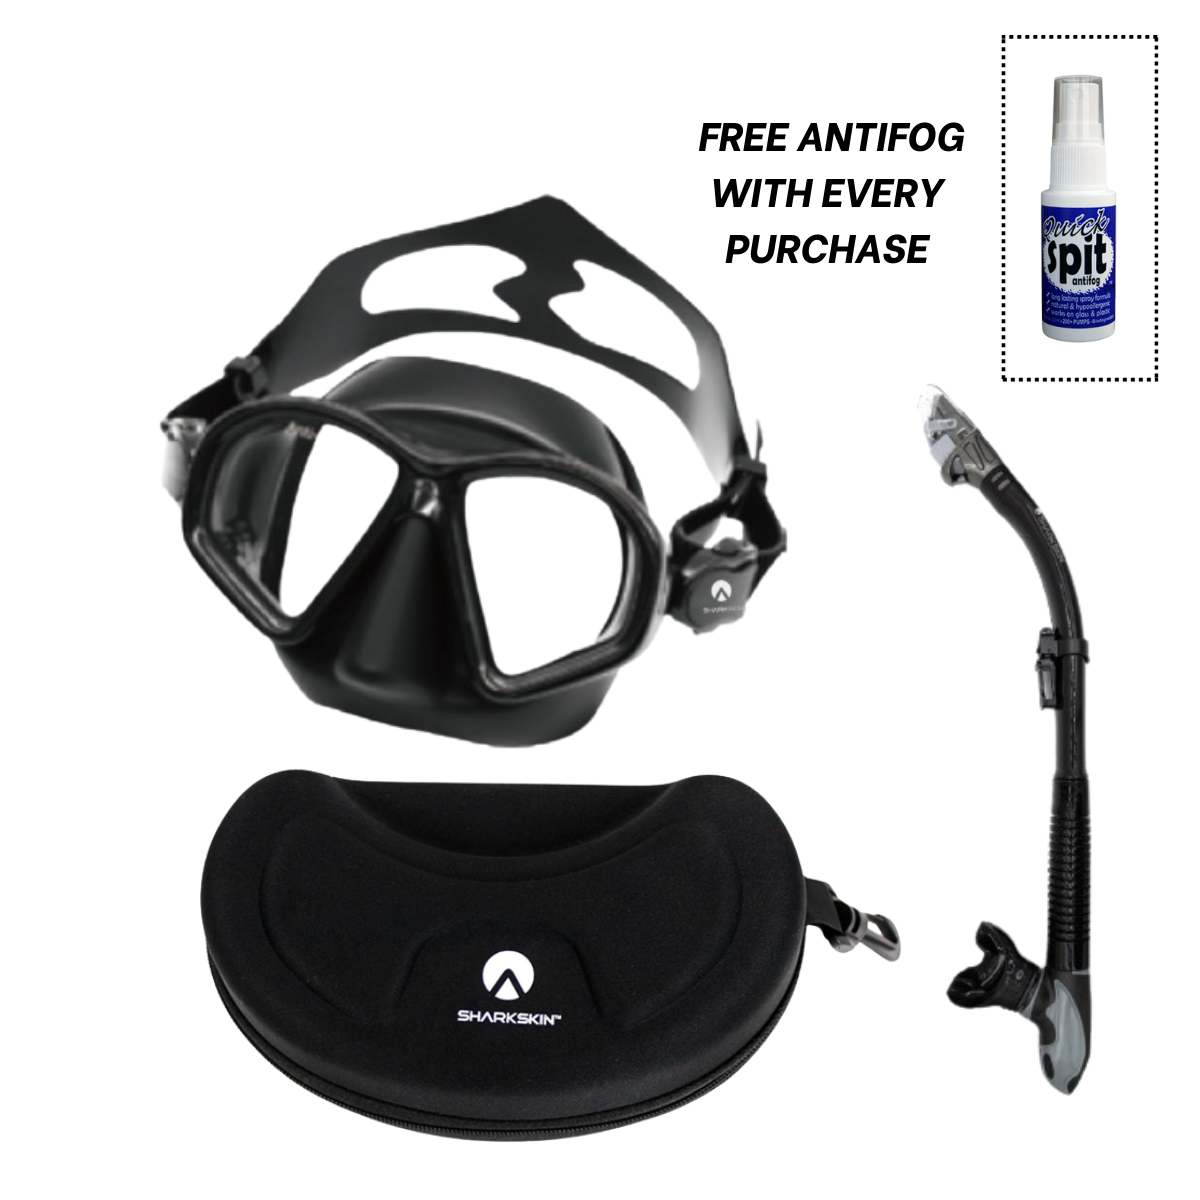 Sharkskin SeaClear Mask With Uv Anti Fog Coating & Sharkskin EasyClear Dry Top Snorkel With Free Anti-fog